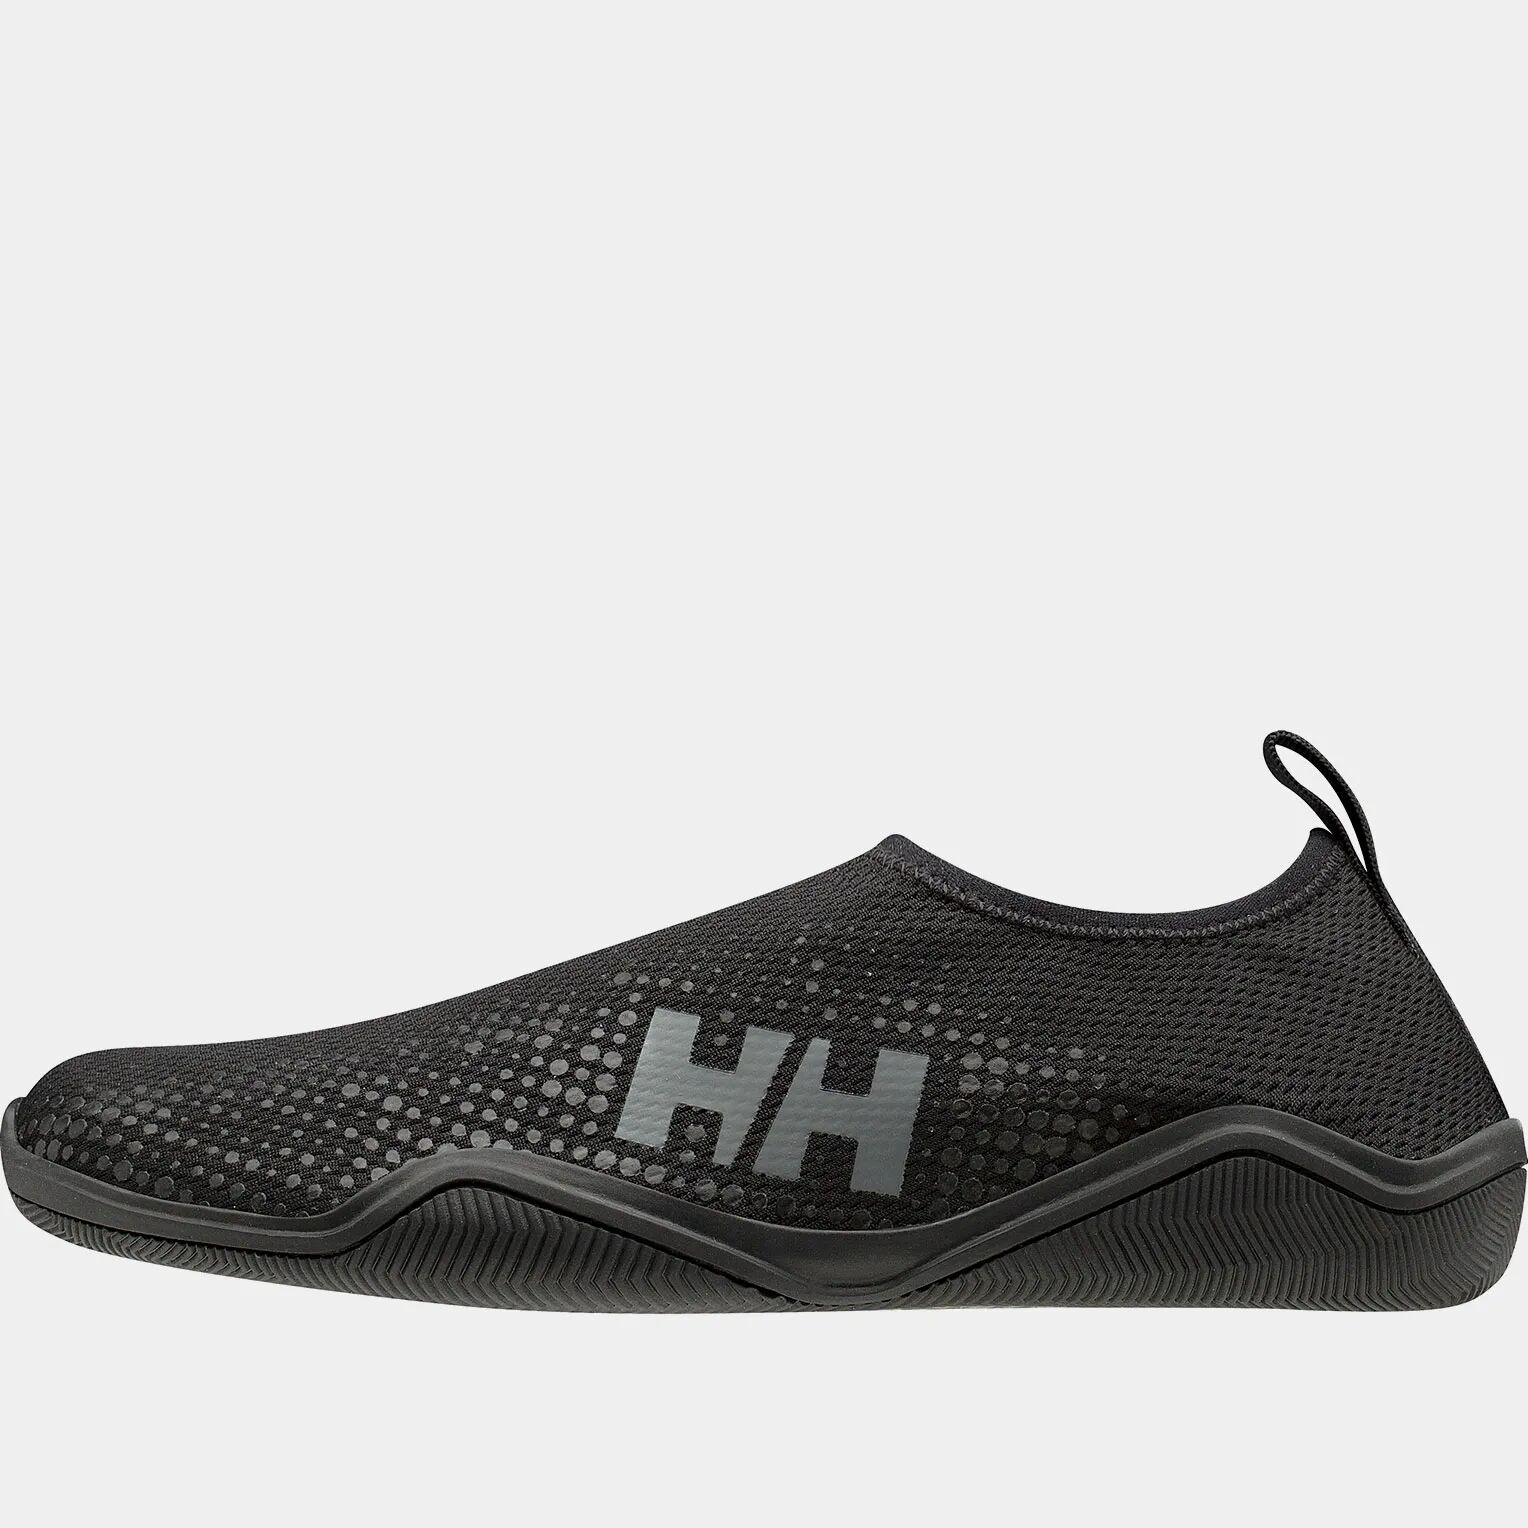 Helly Hansen Women's Crest Watermocs Water Shoes Black 9.5